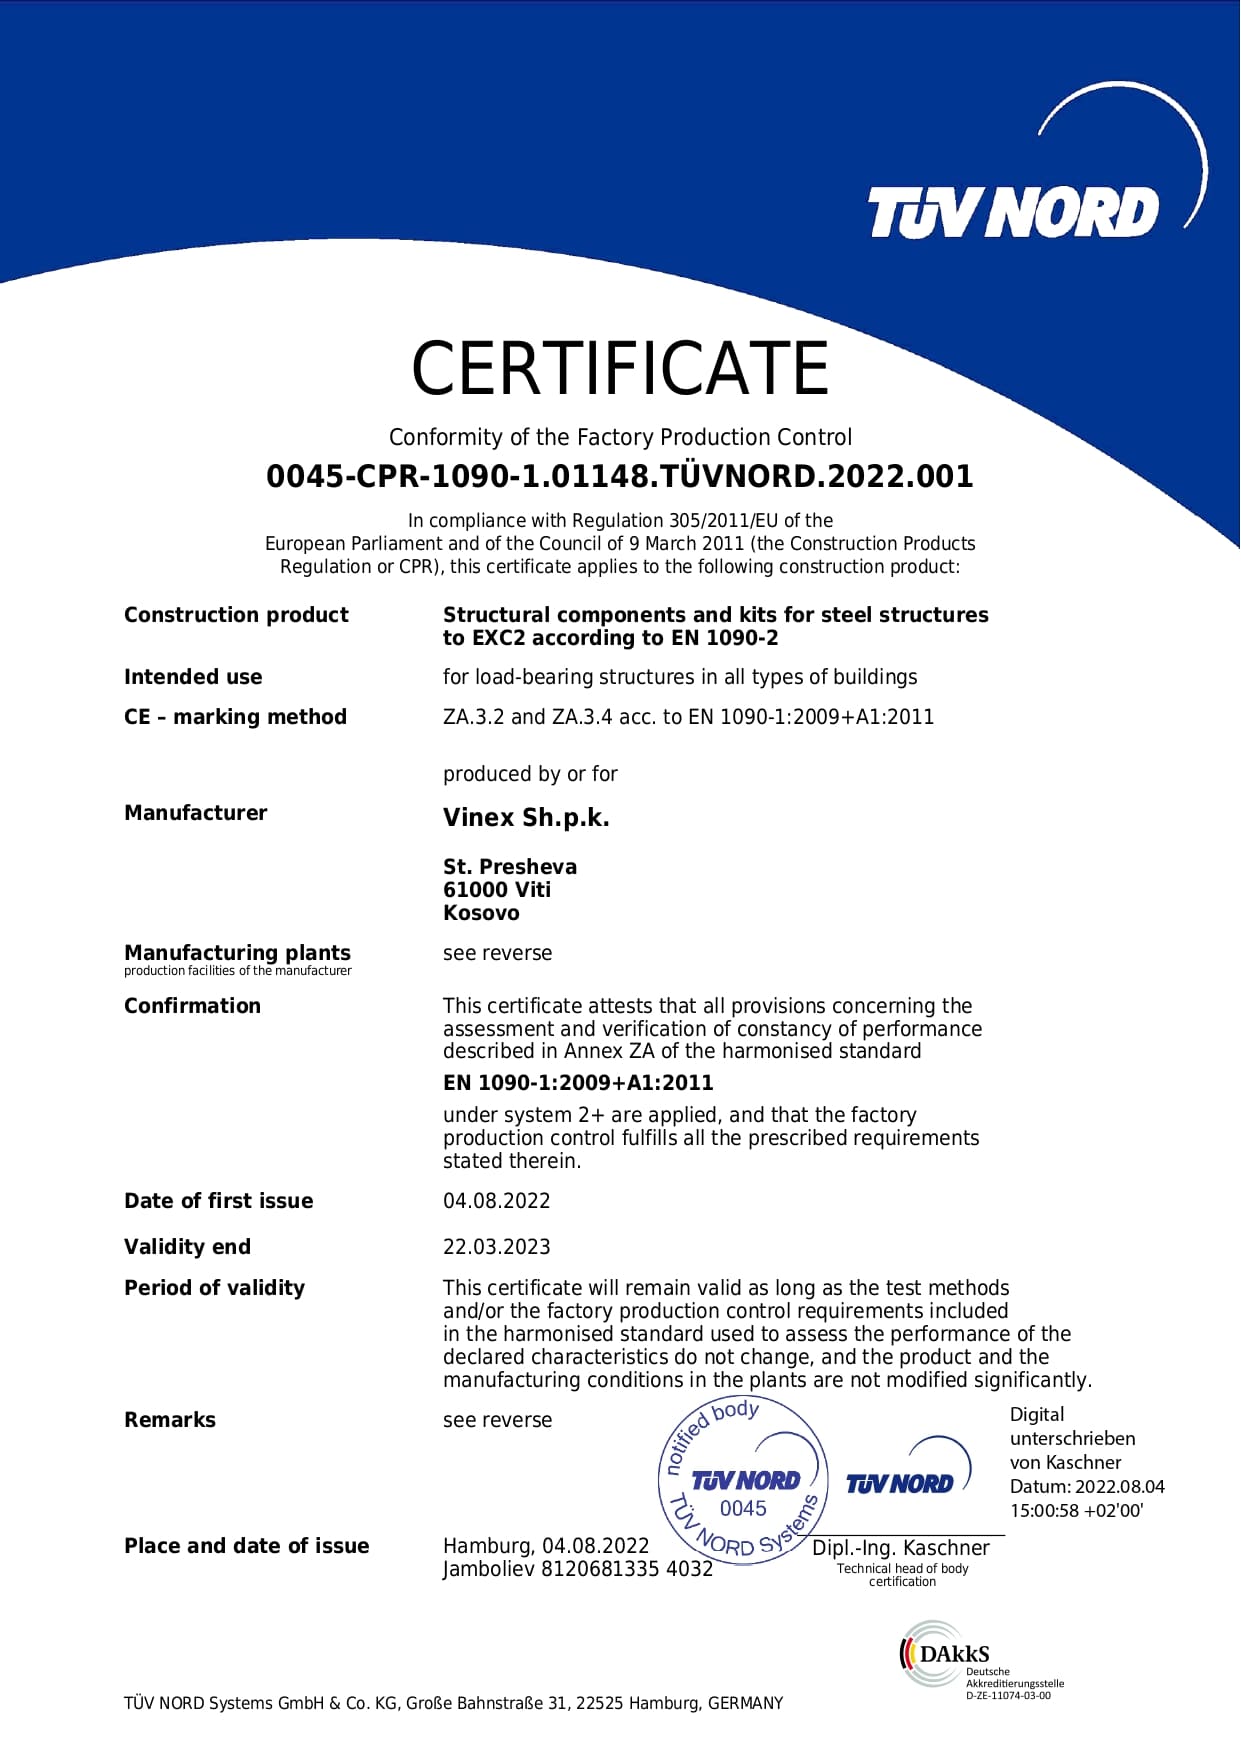 Vinex ISO certificate image